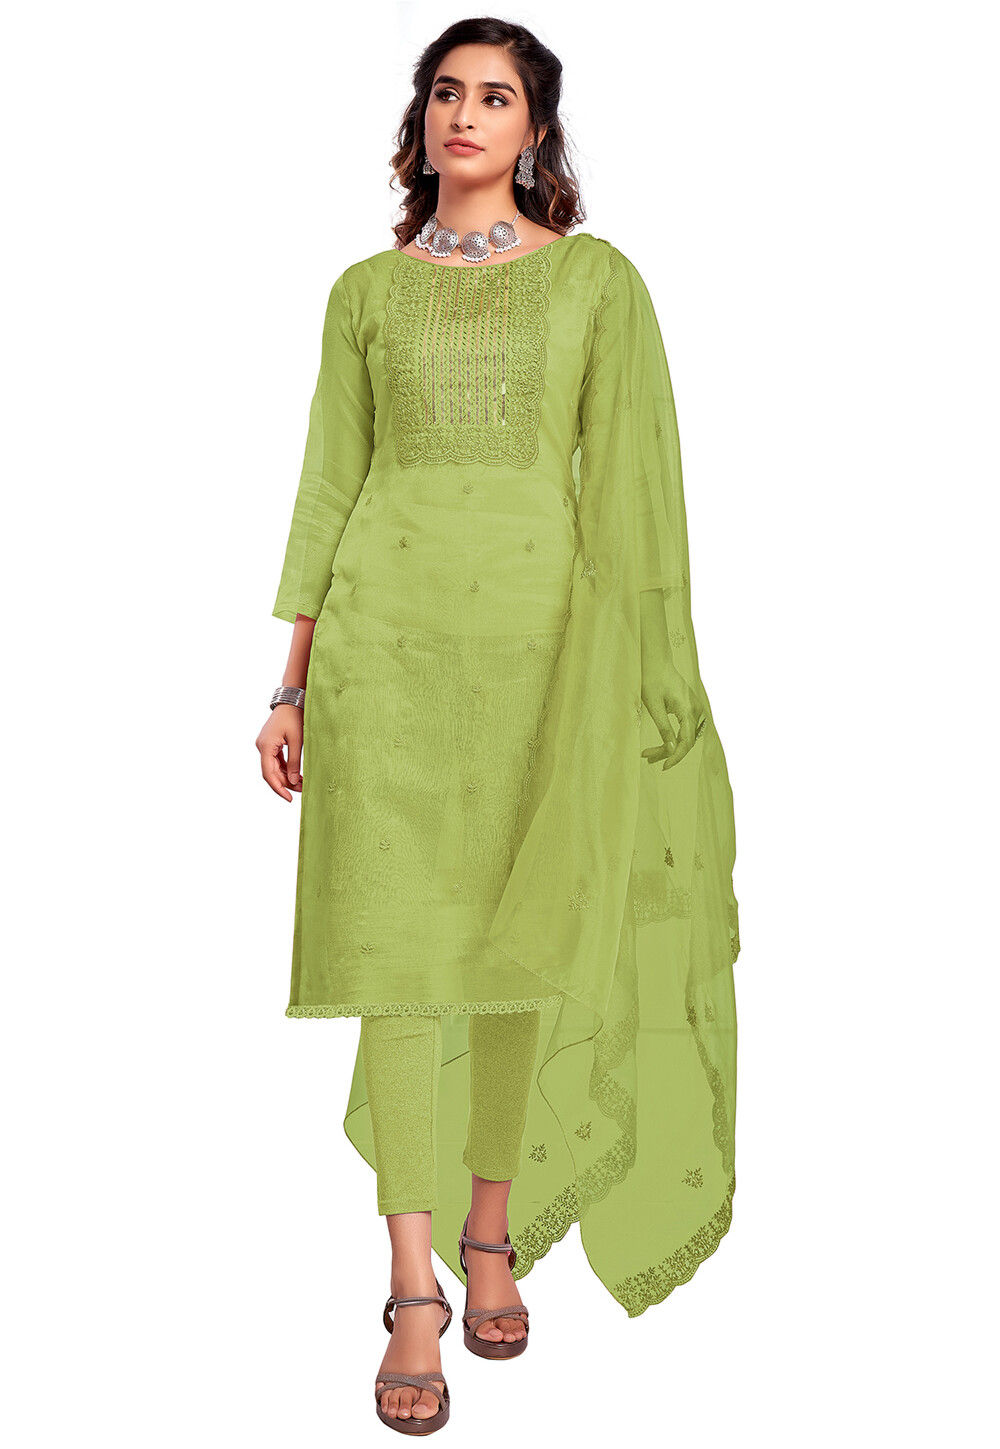 Pista Green Color Georgette Resham Work Palazzo Suit